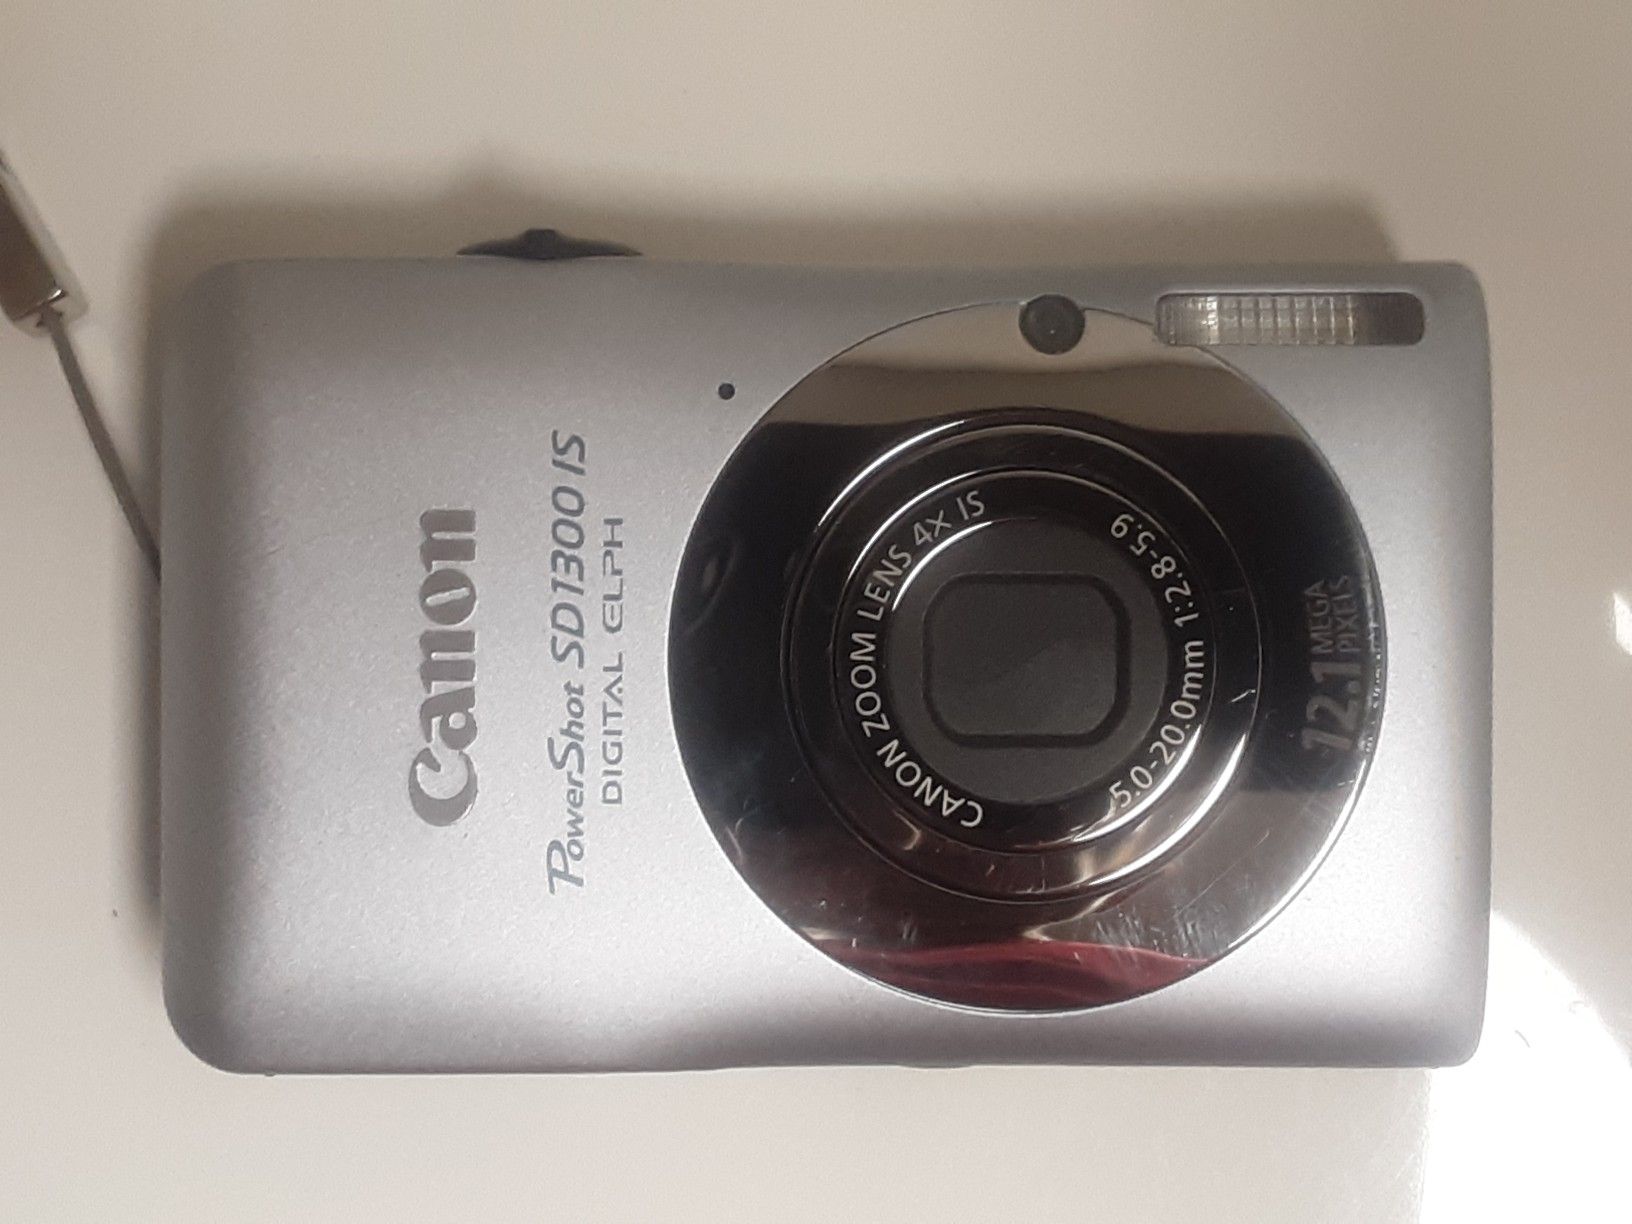 Canon power shot sd1300IS digital camera